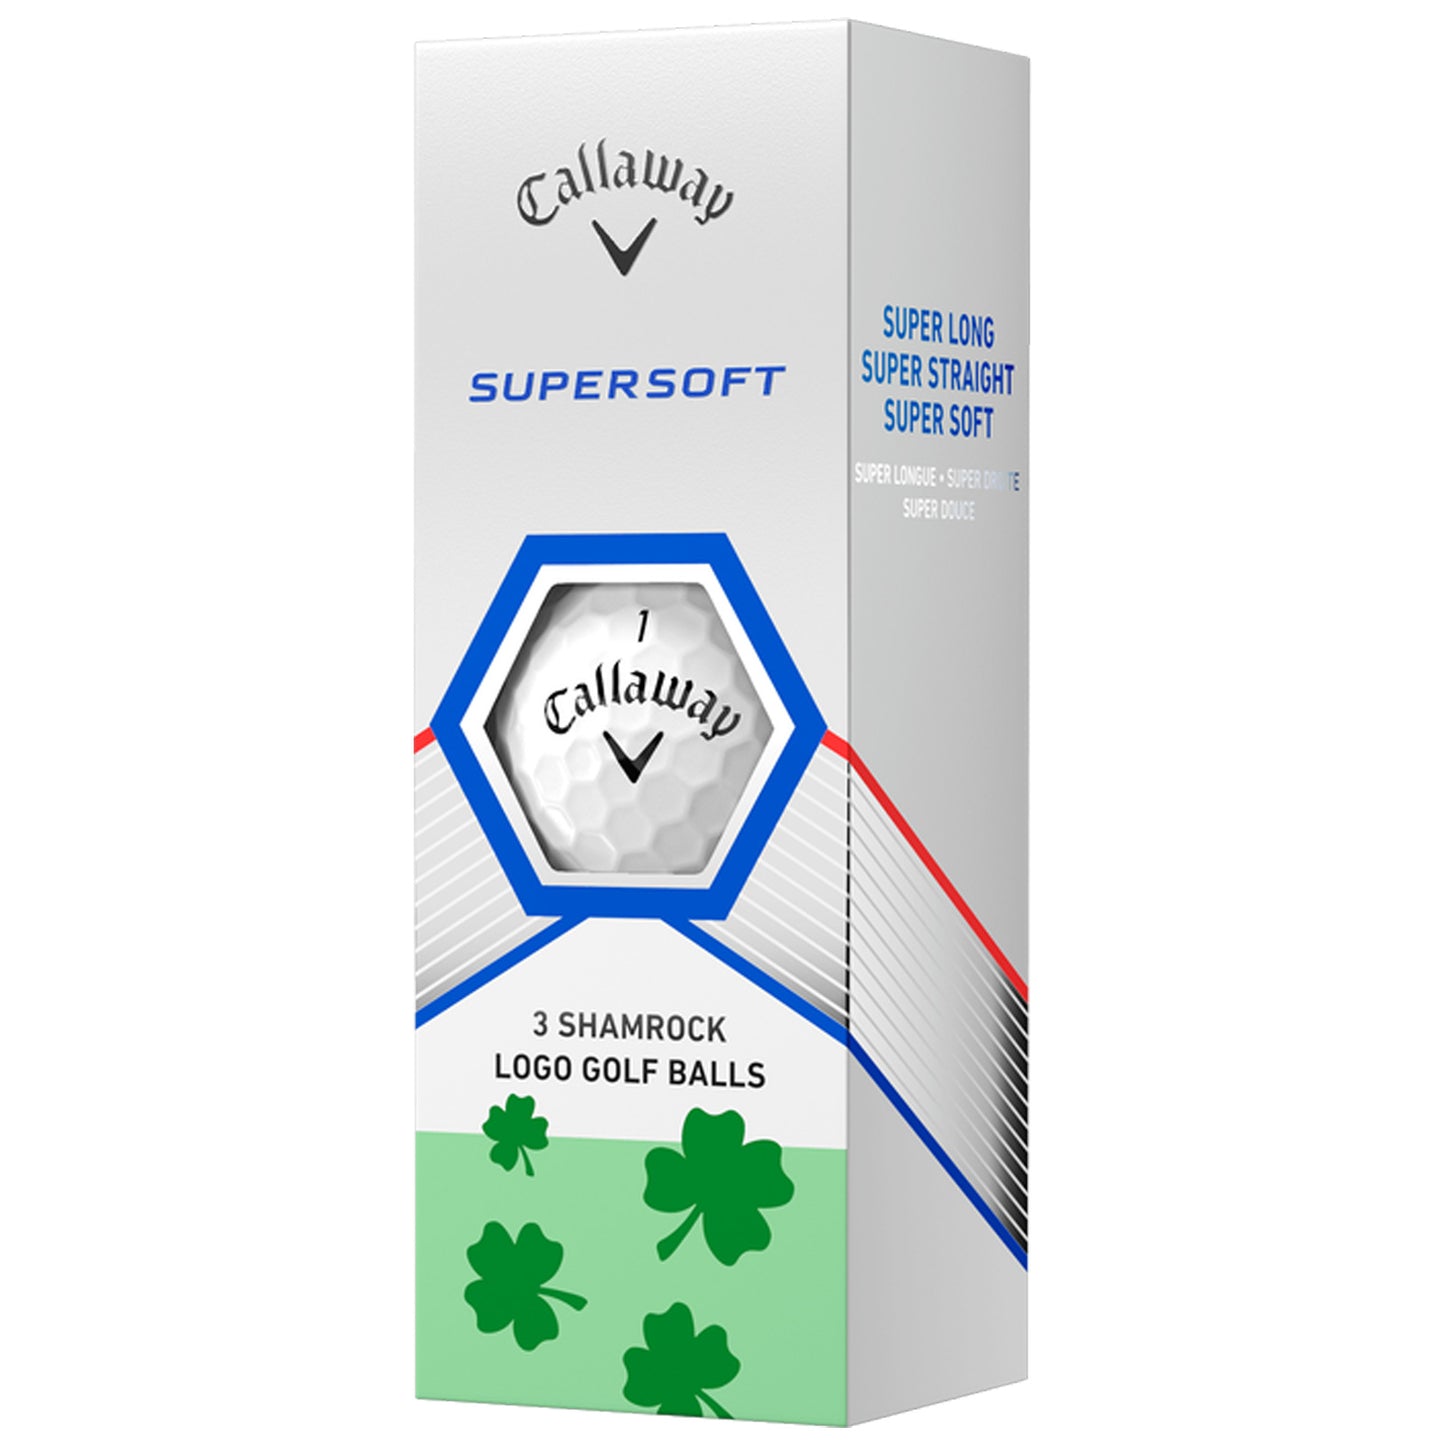 Callaway Supersoft Limited Edition Shamrock Golf Balls